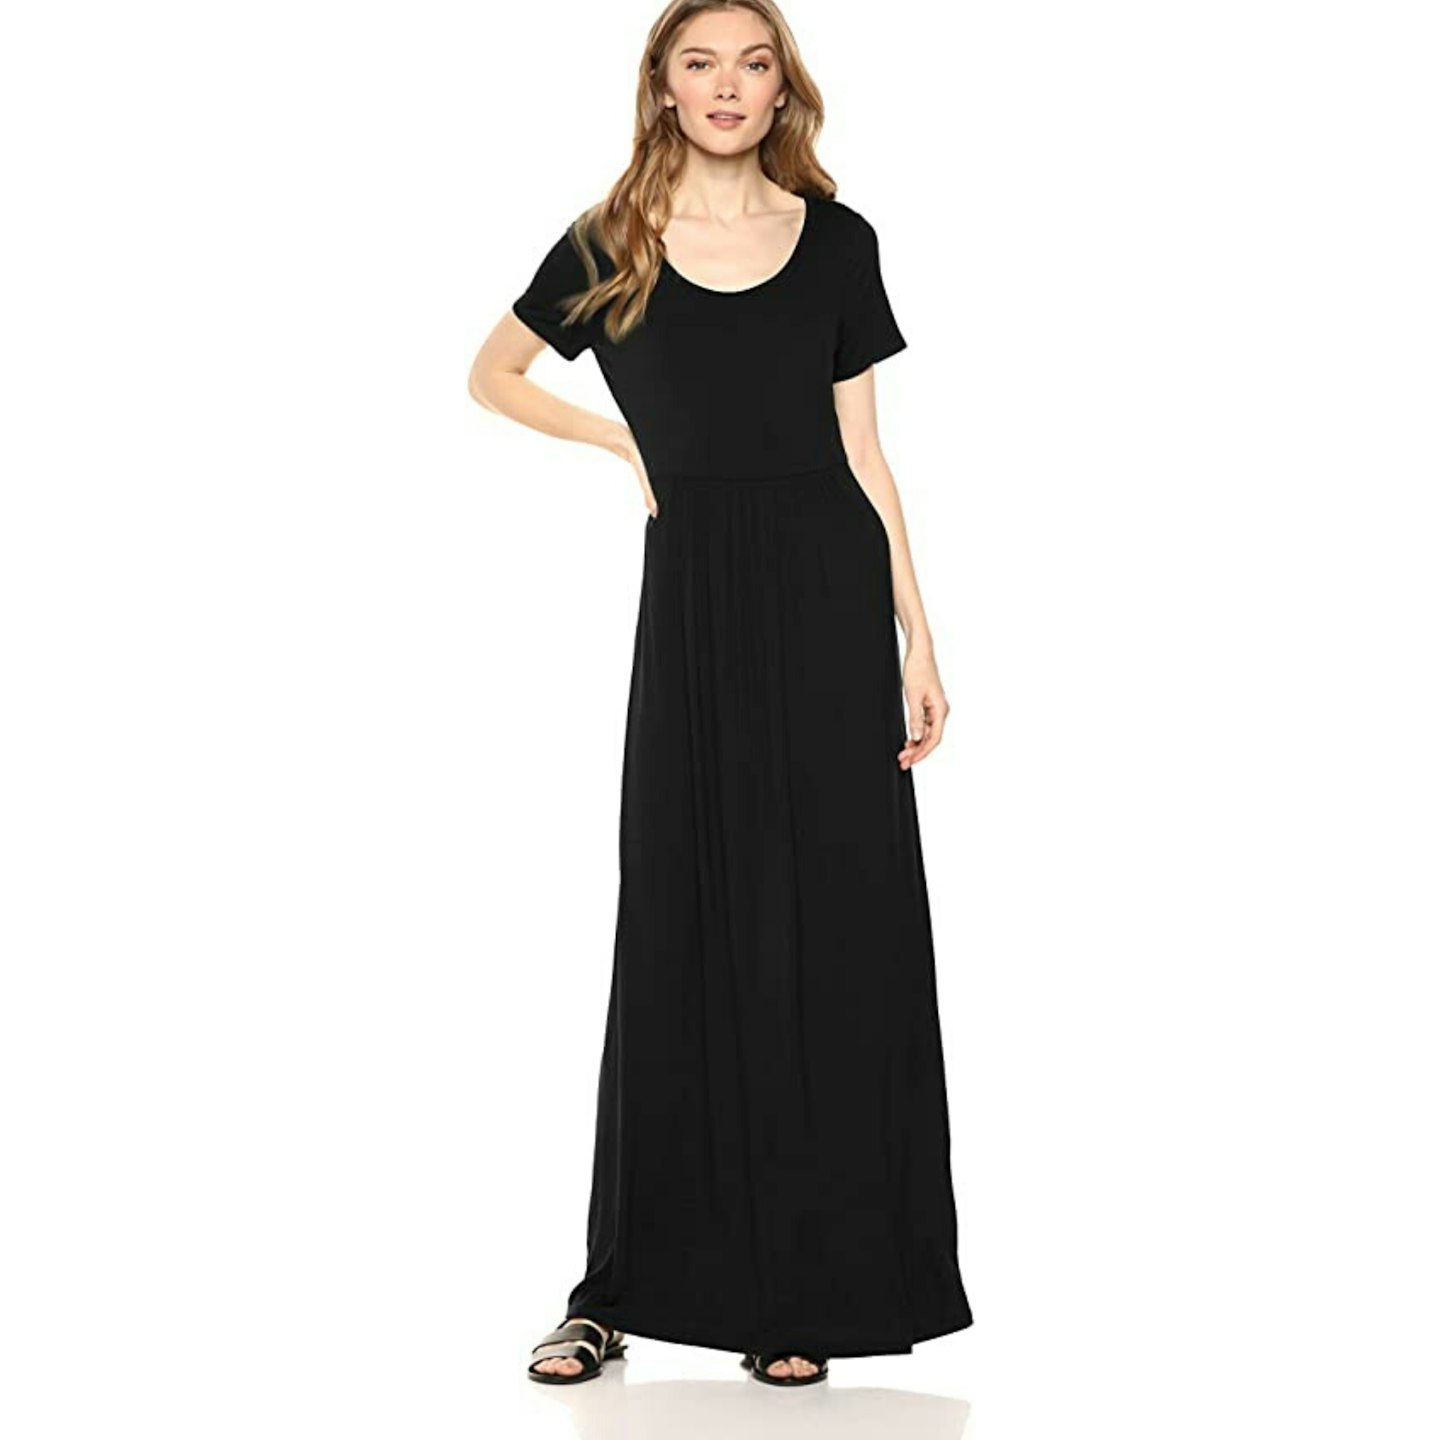 Amazon Brand - Daily Ritual Women's Jersey Short-Sleeve Empire-Waist Maxi Dress